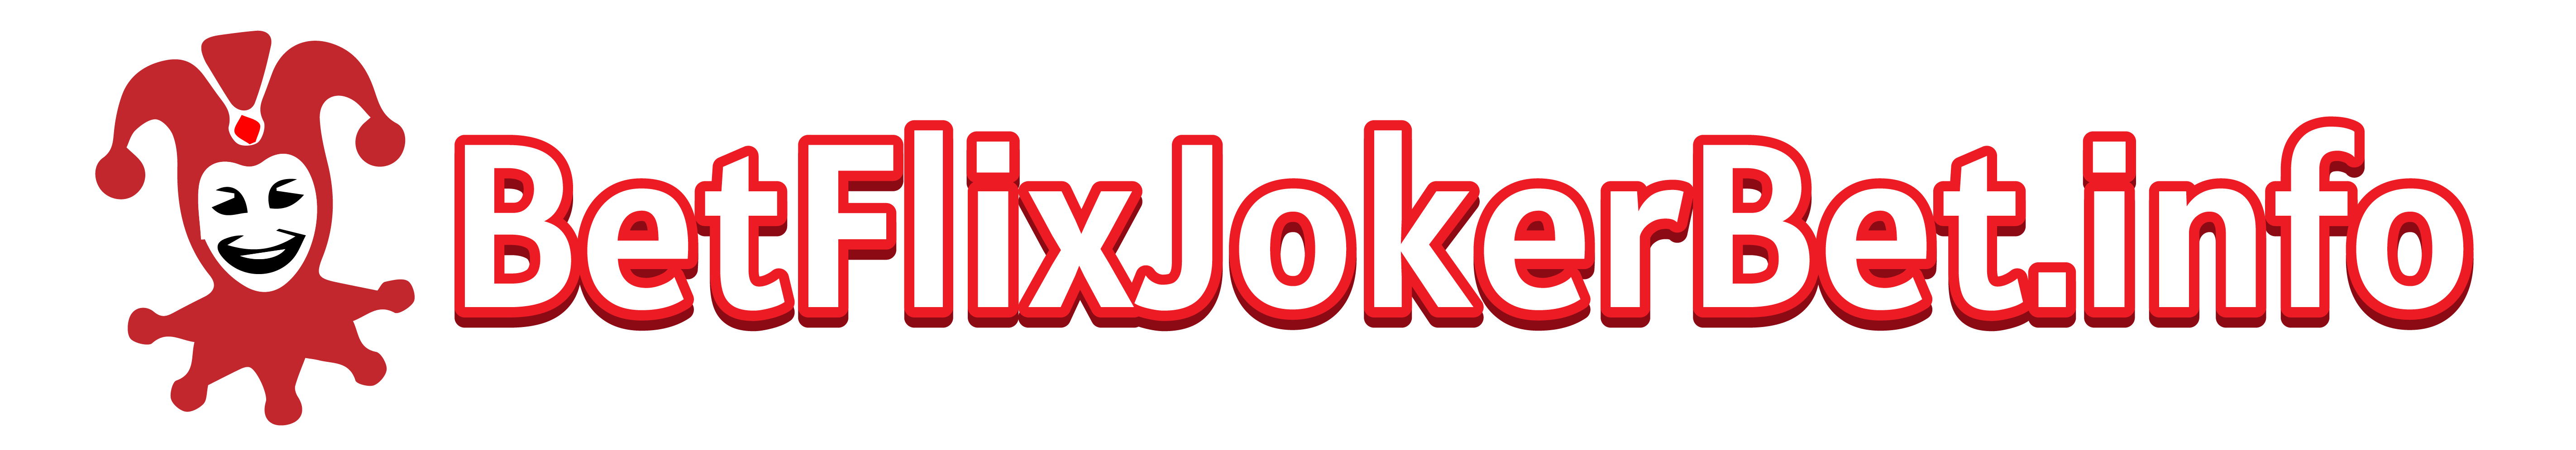 BetFlixJokerBet.info logo